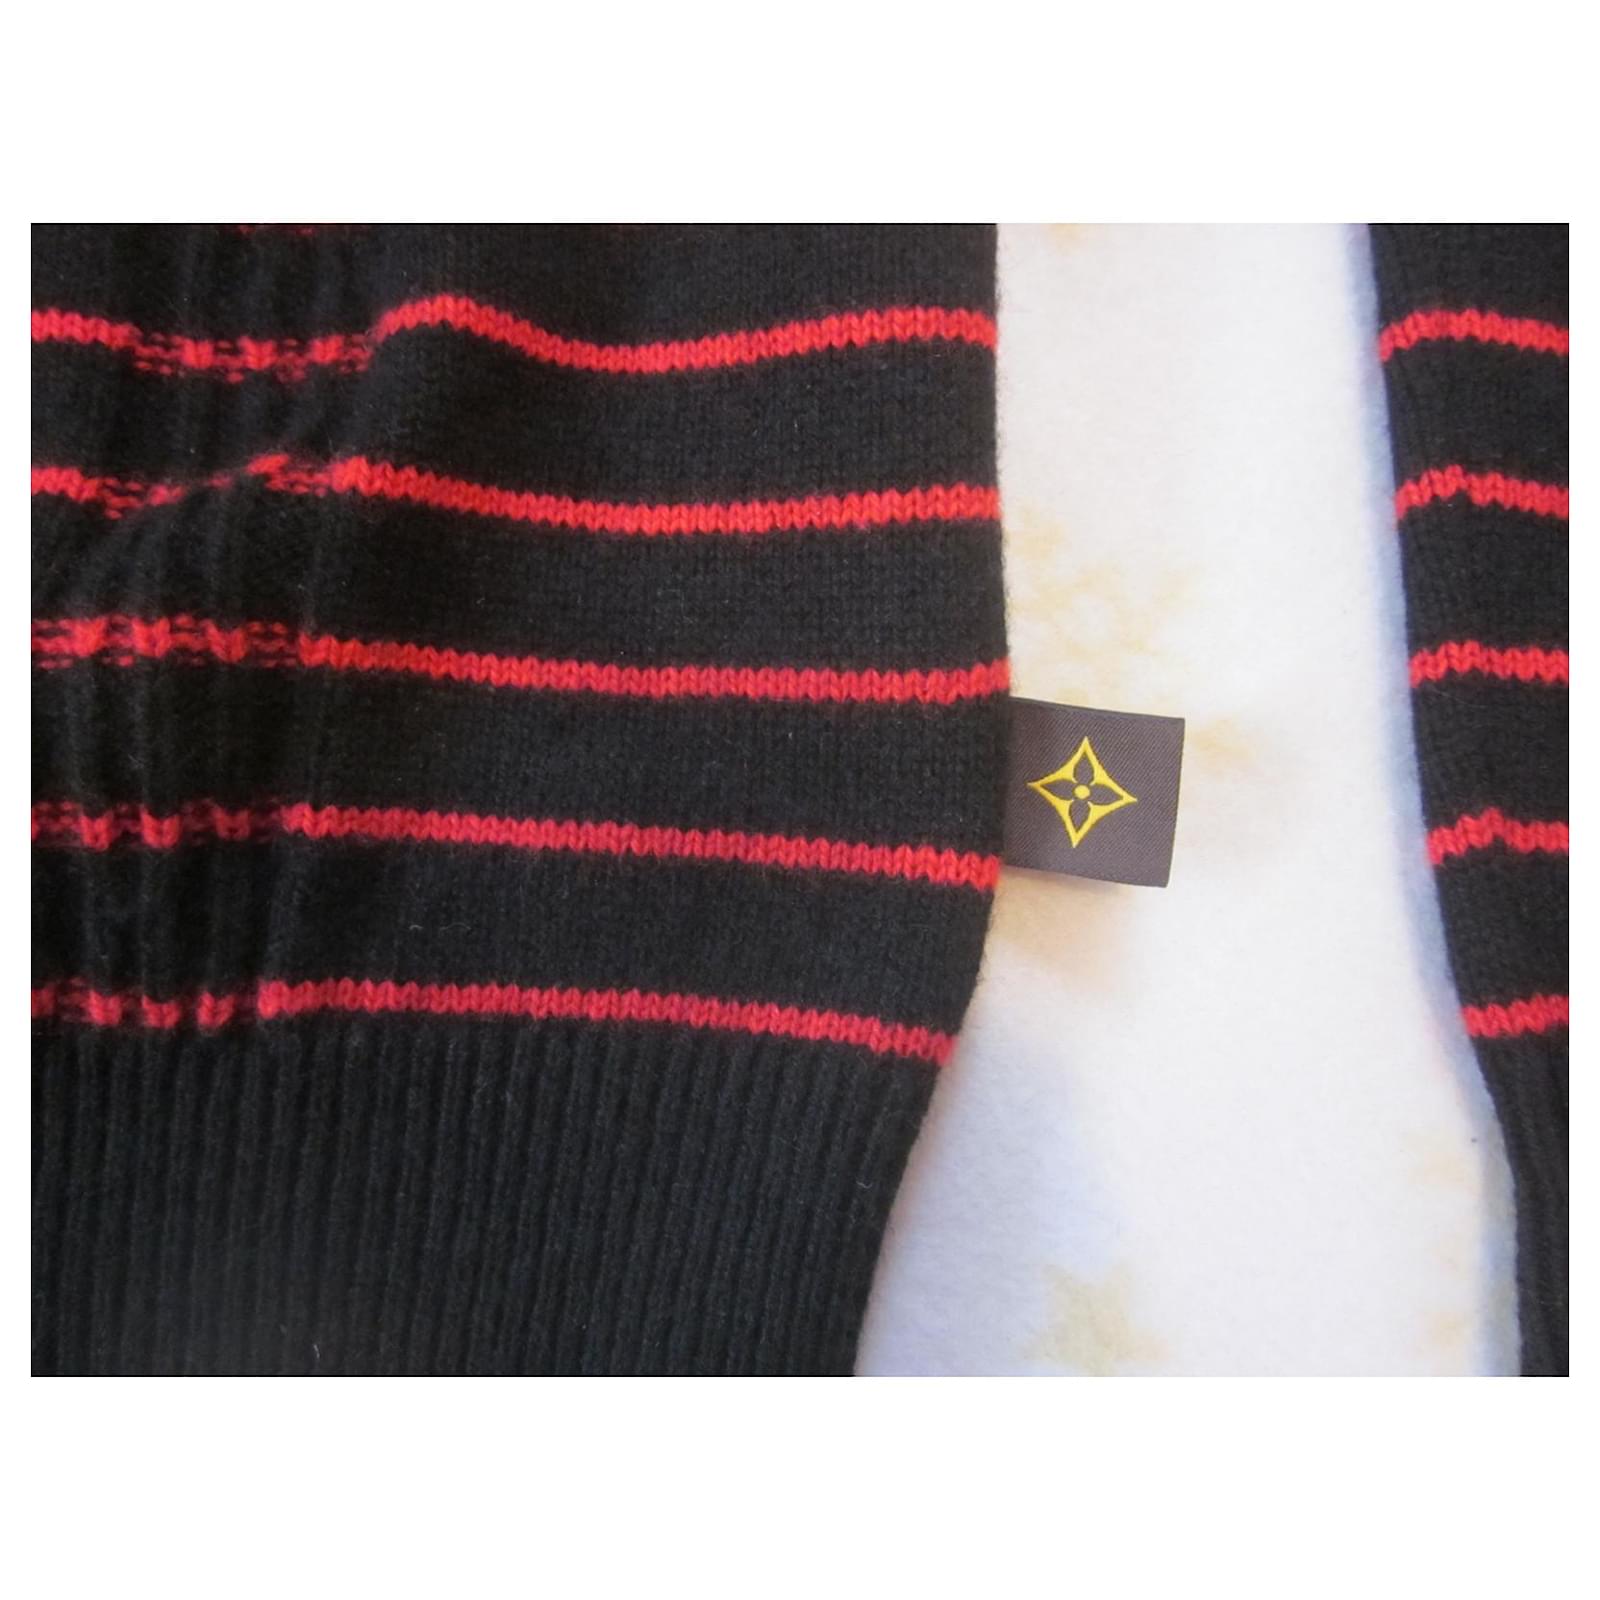 Knitwear Louis Vuitton Monogram Black/Red Size M Inter